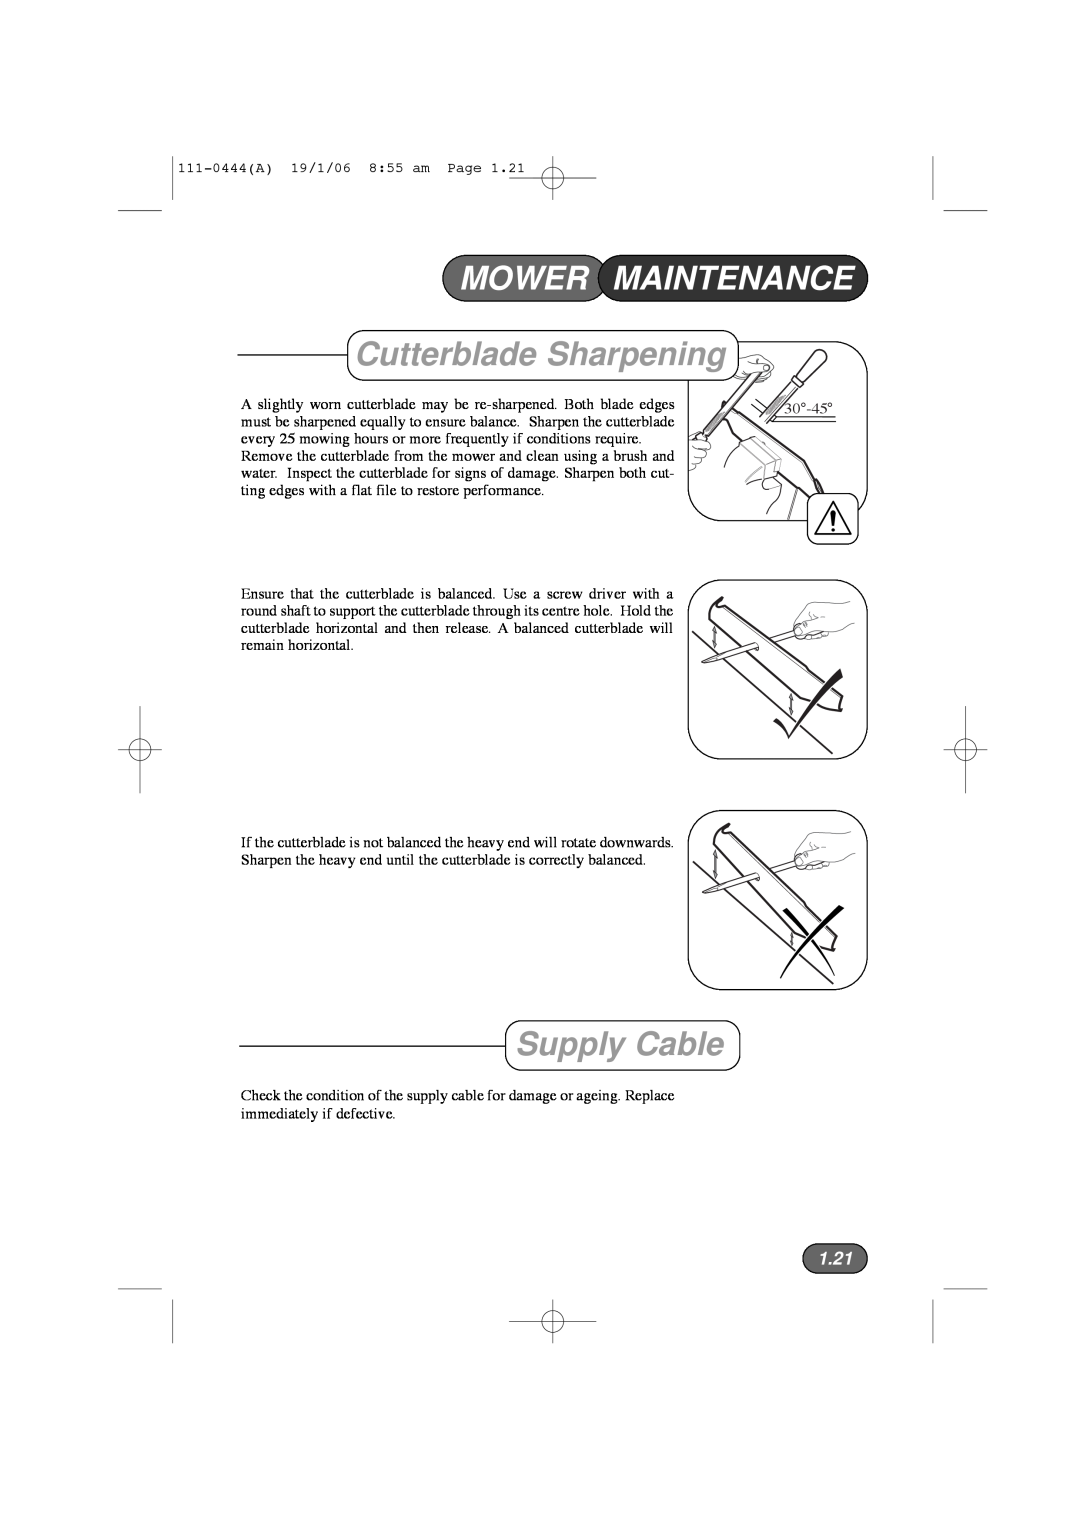 Hayter Mowers 100D manual Cutterblade Sharpening, 1.21, Mower Maintenance, Supply Cable 